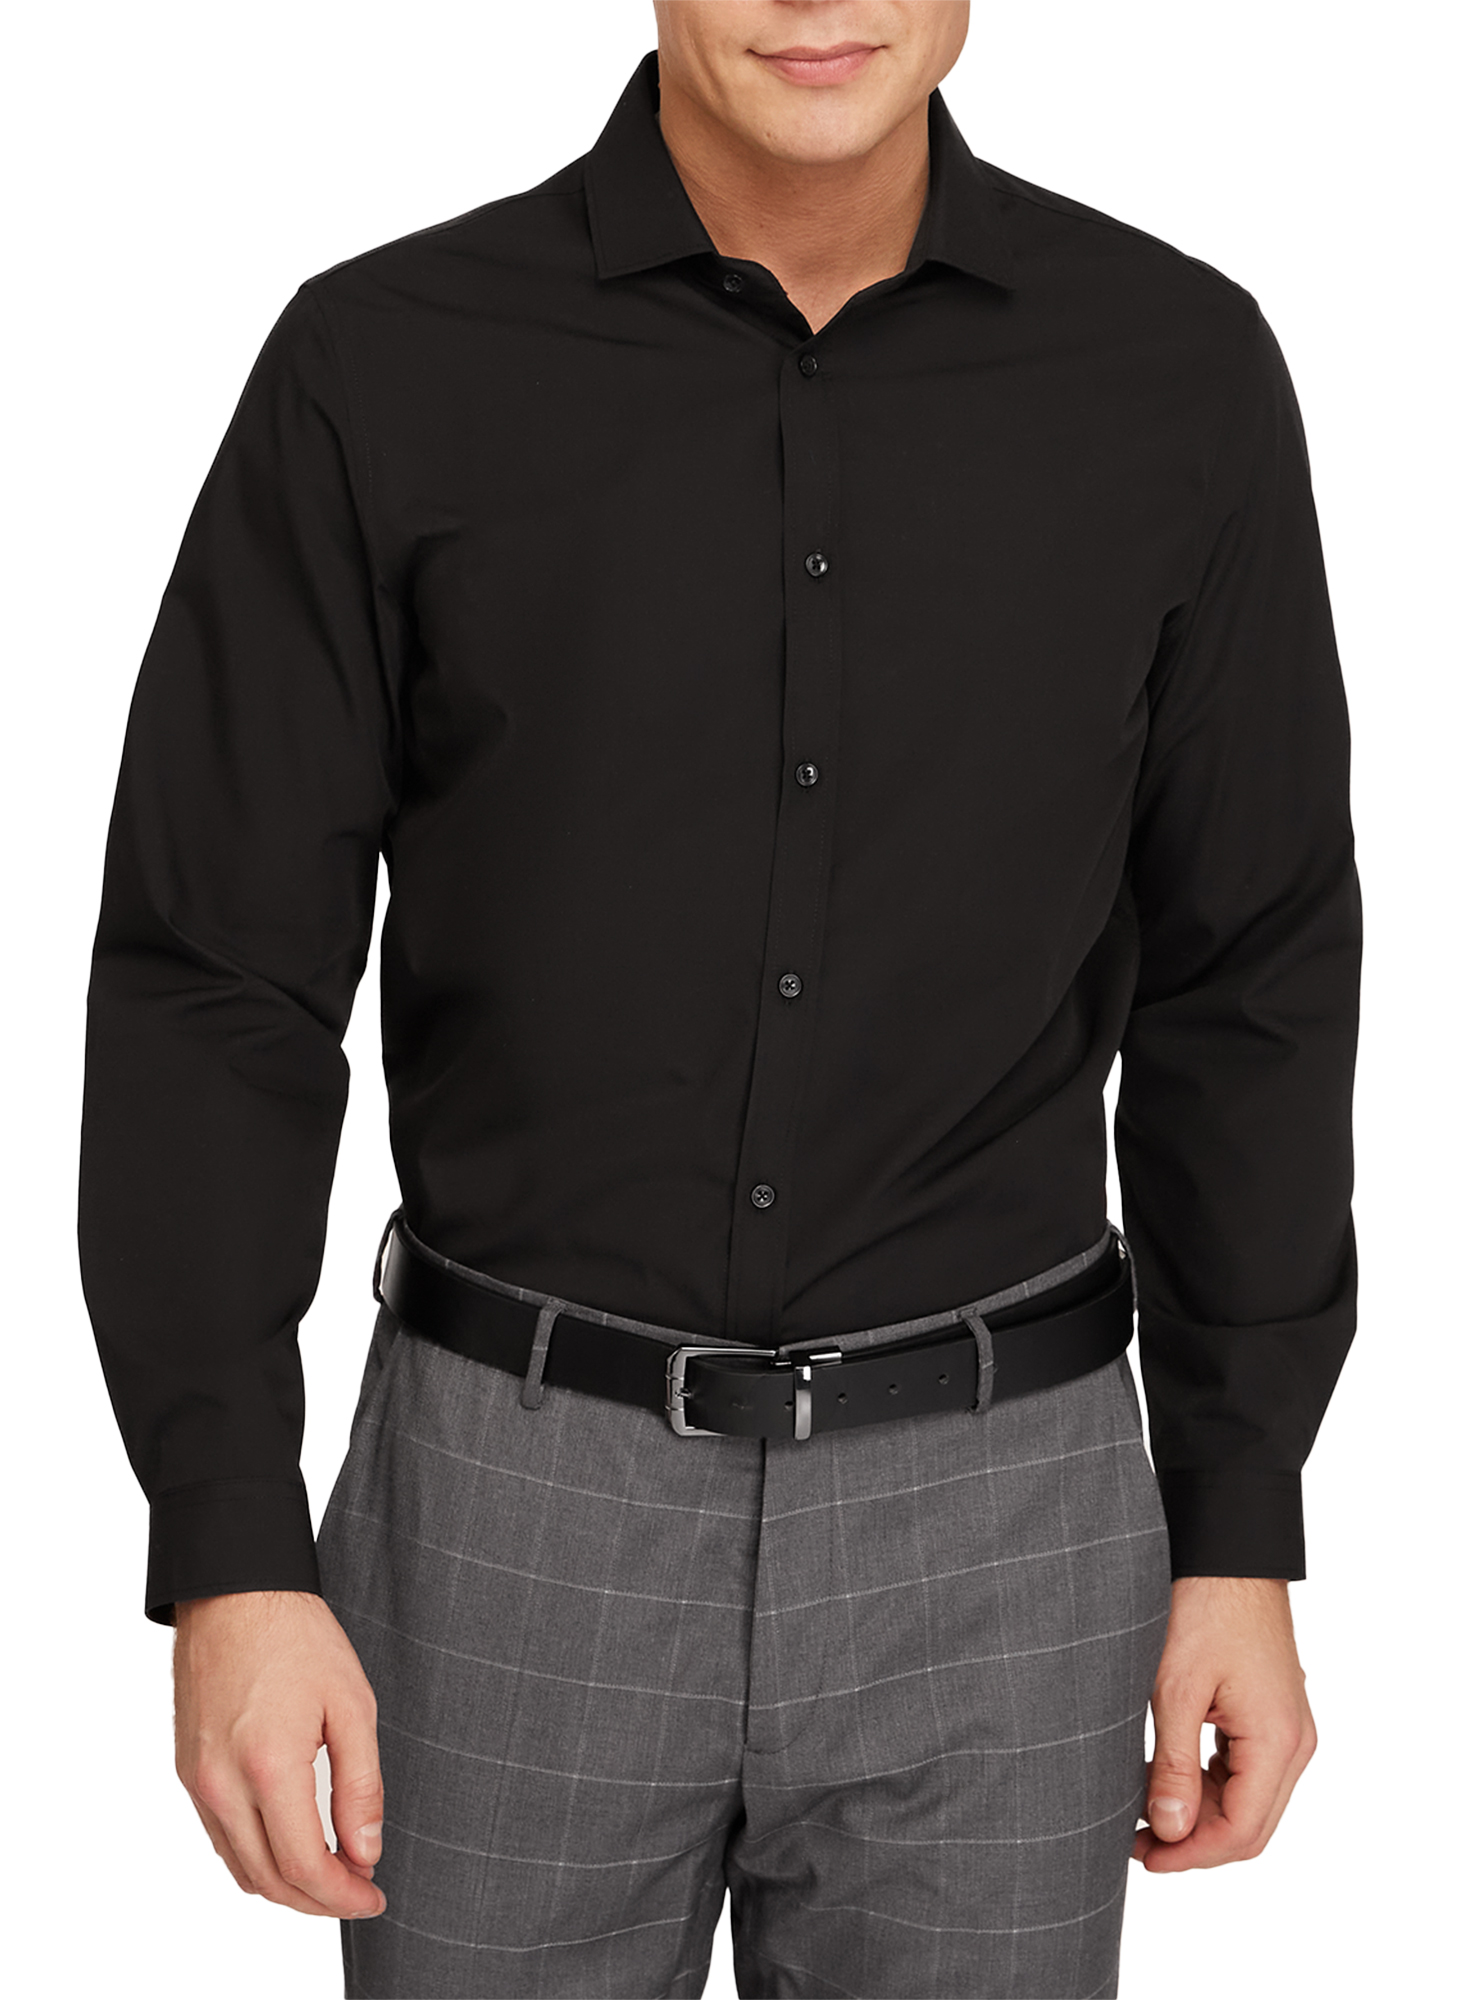 Рубашка мужская oodji 3B110034M-1 черная 2XL